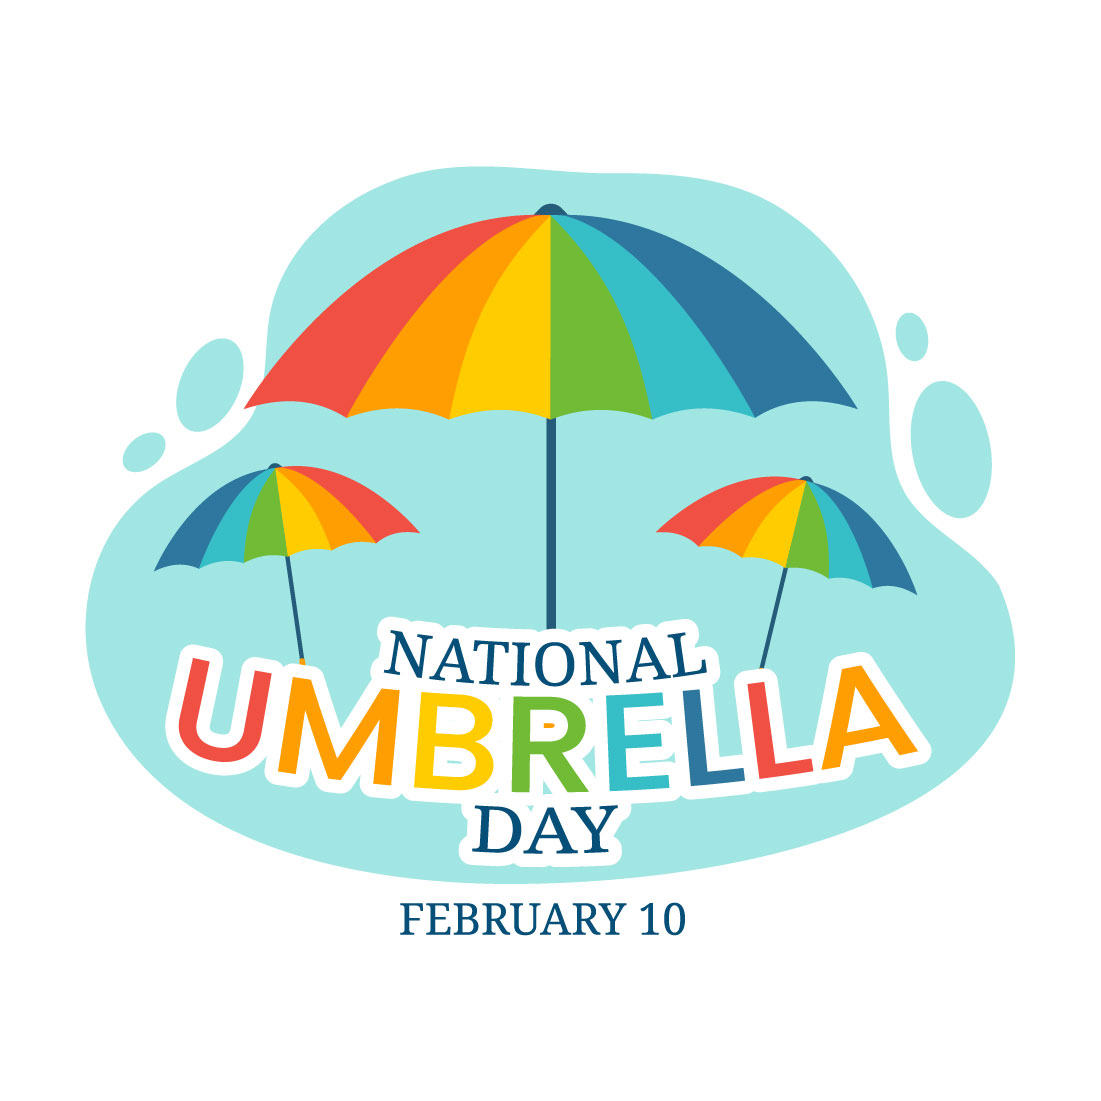 Umbrella Day Design Illustration cover image.